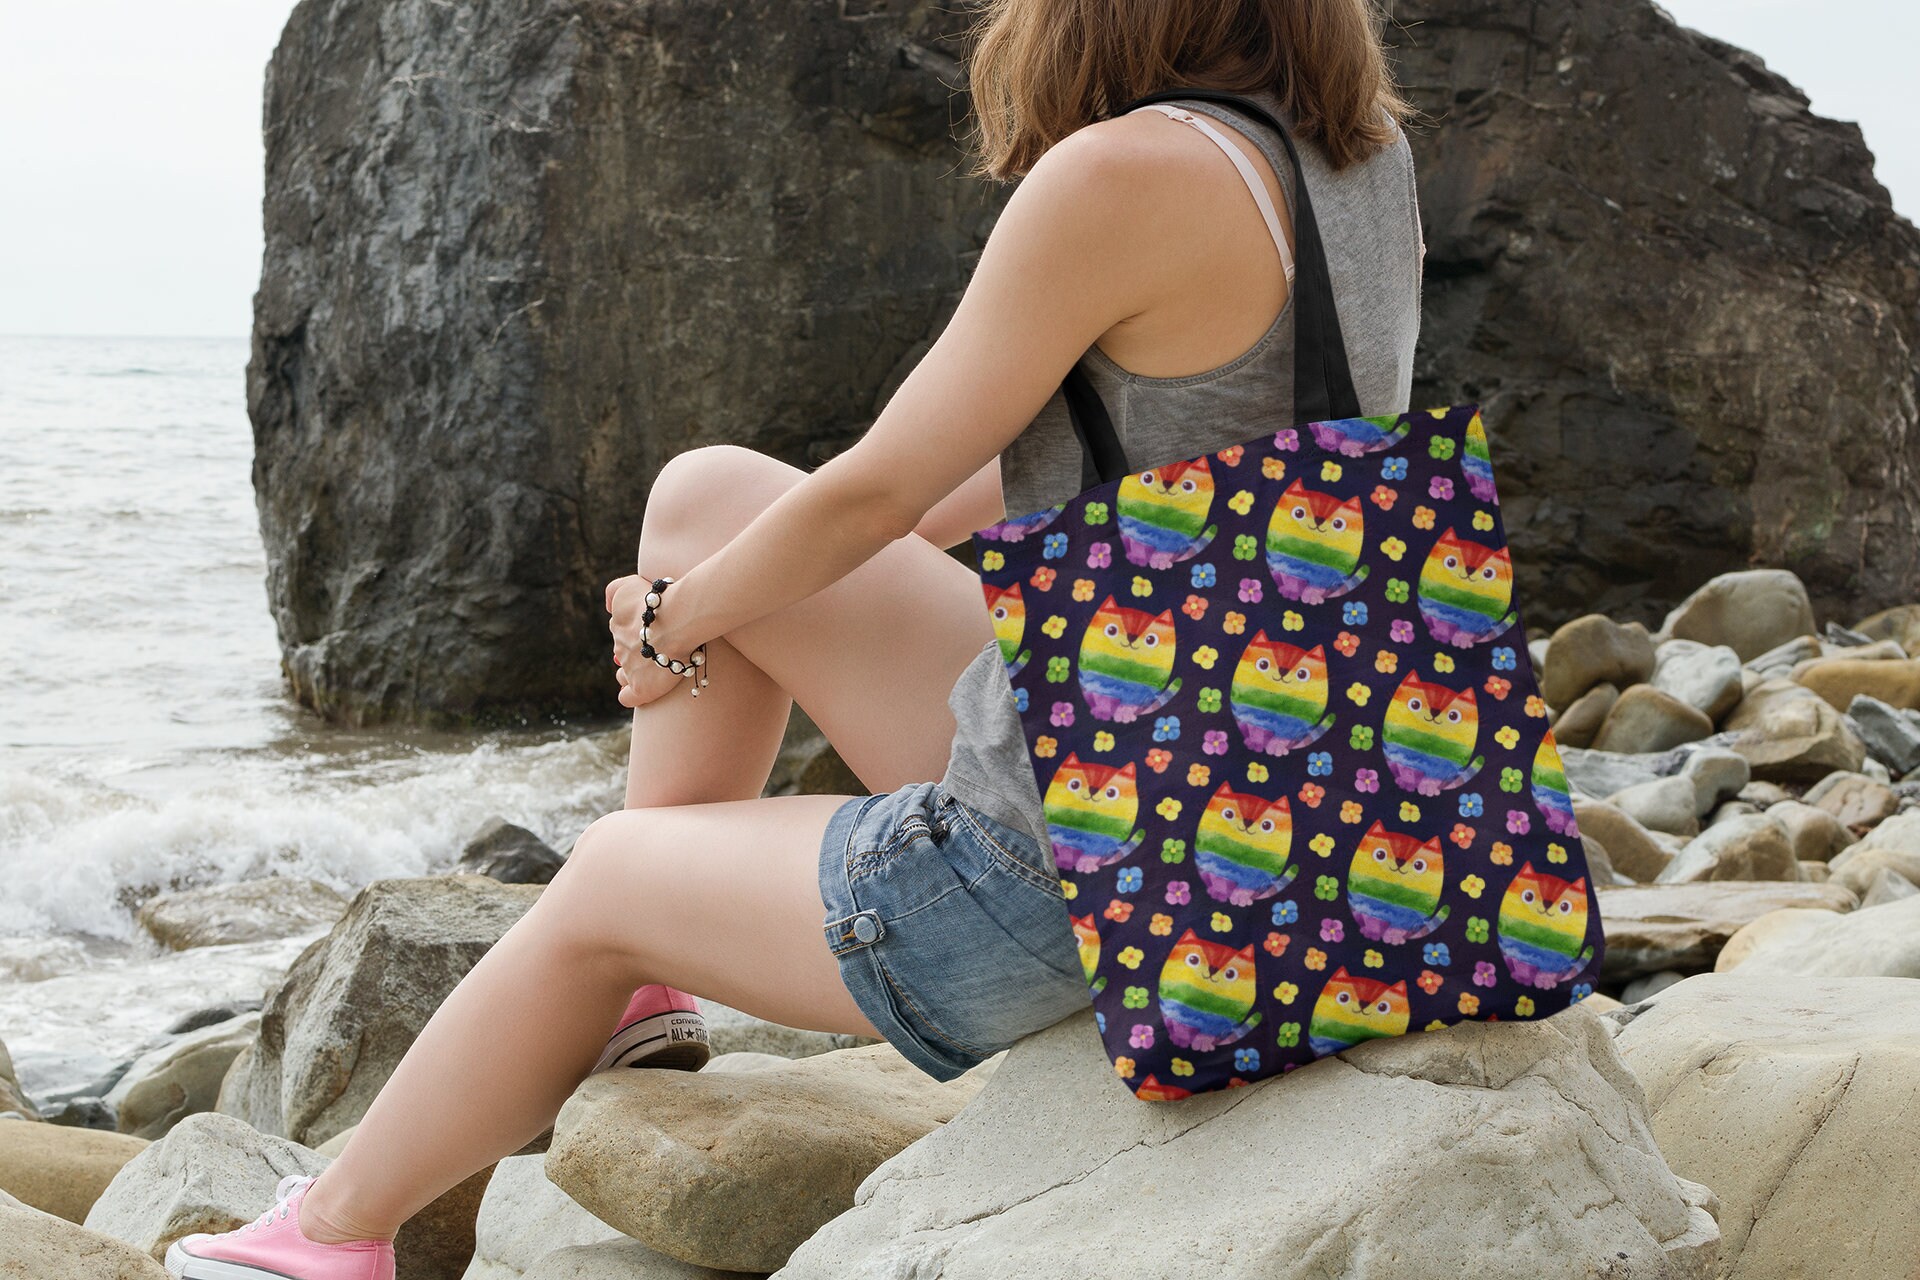 Celebrate Pride Rainbow Natural Tote Bag – Aesthetics Boutique